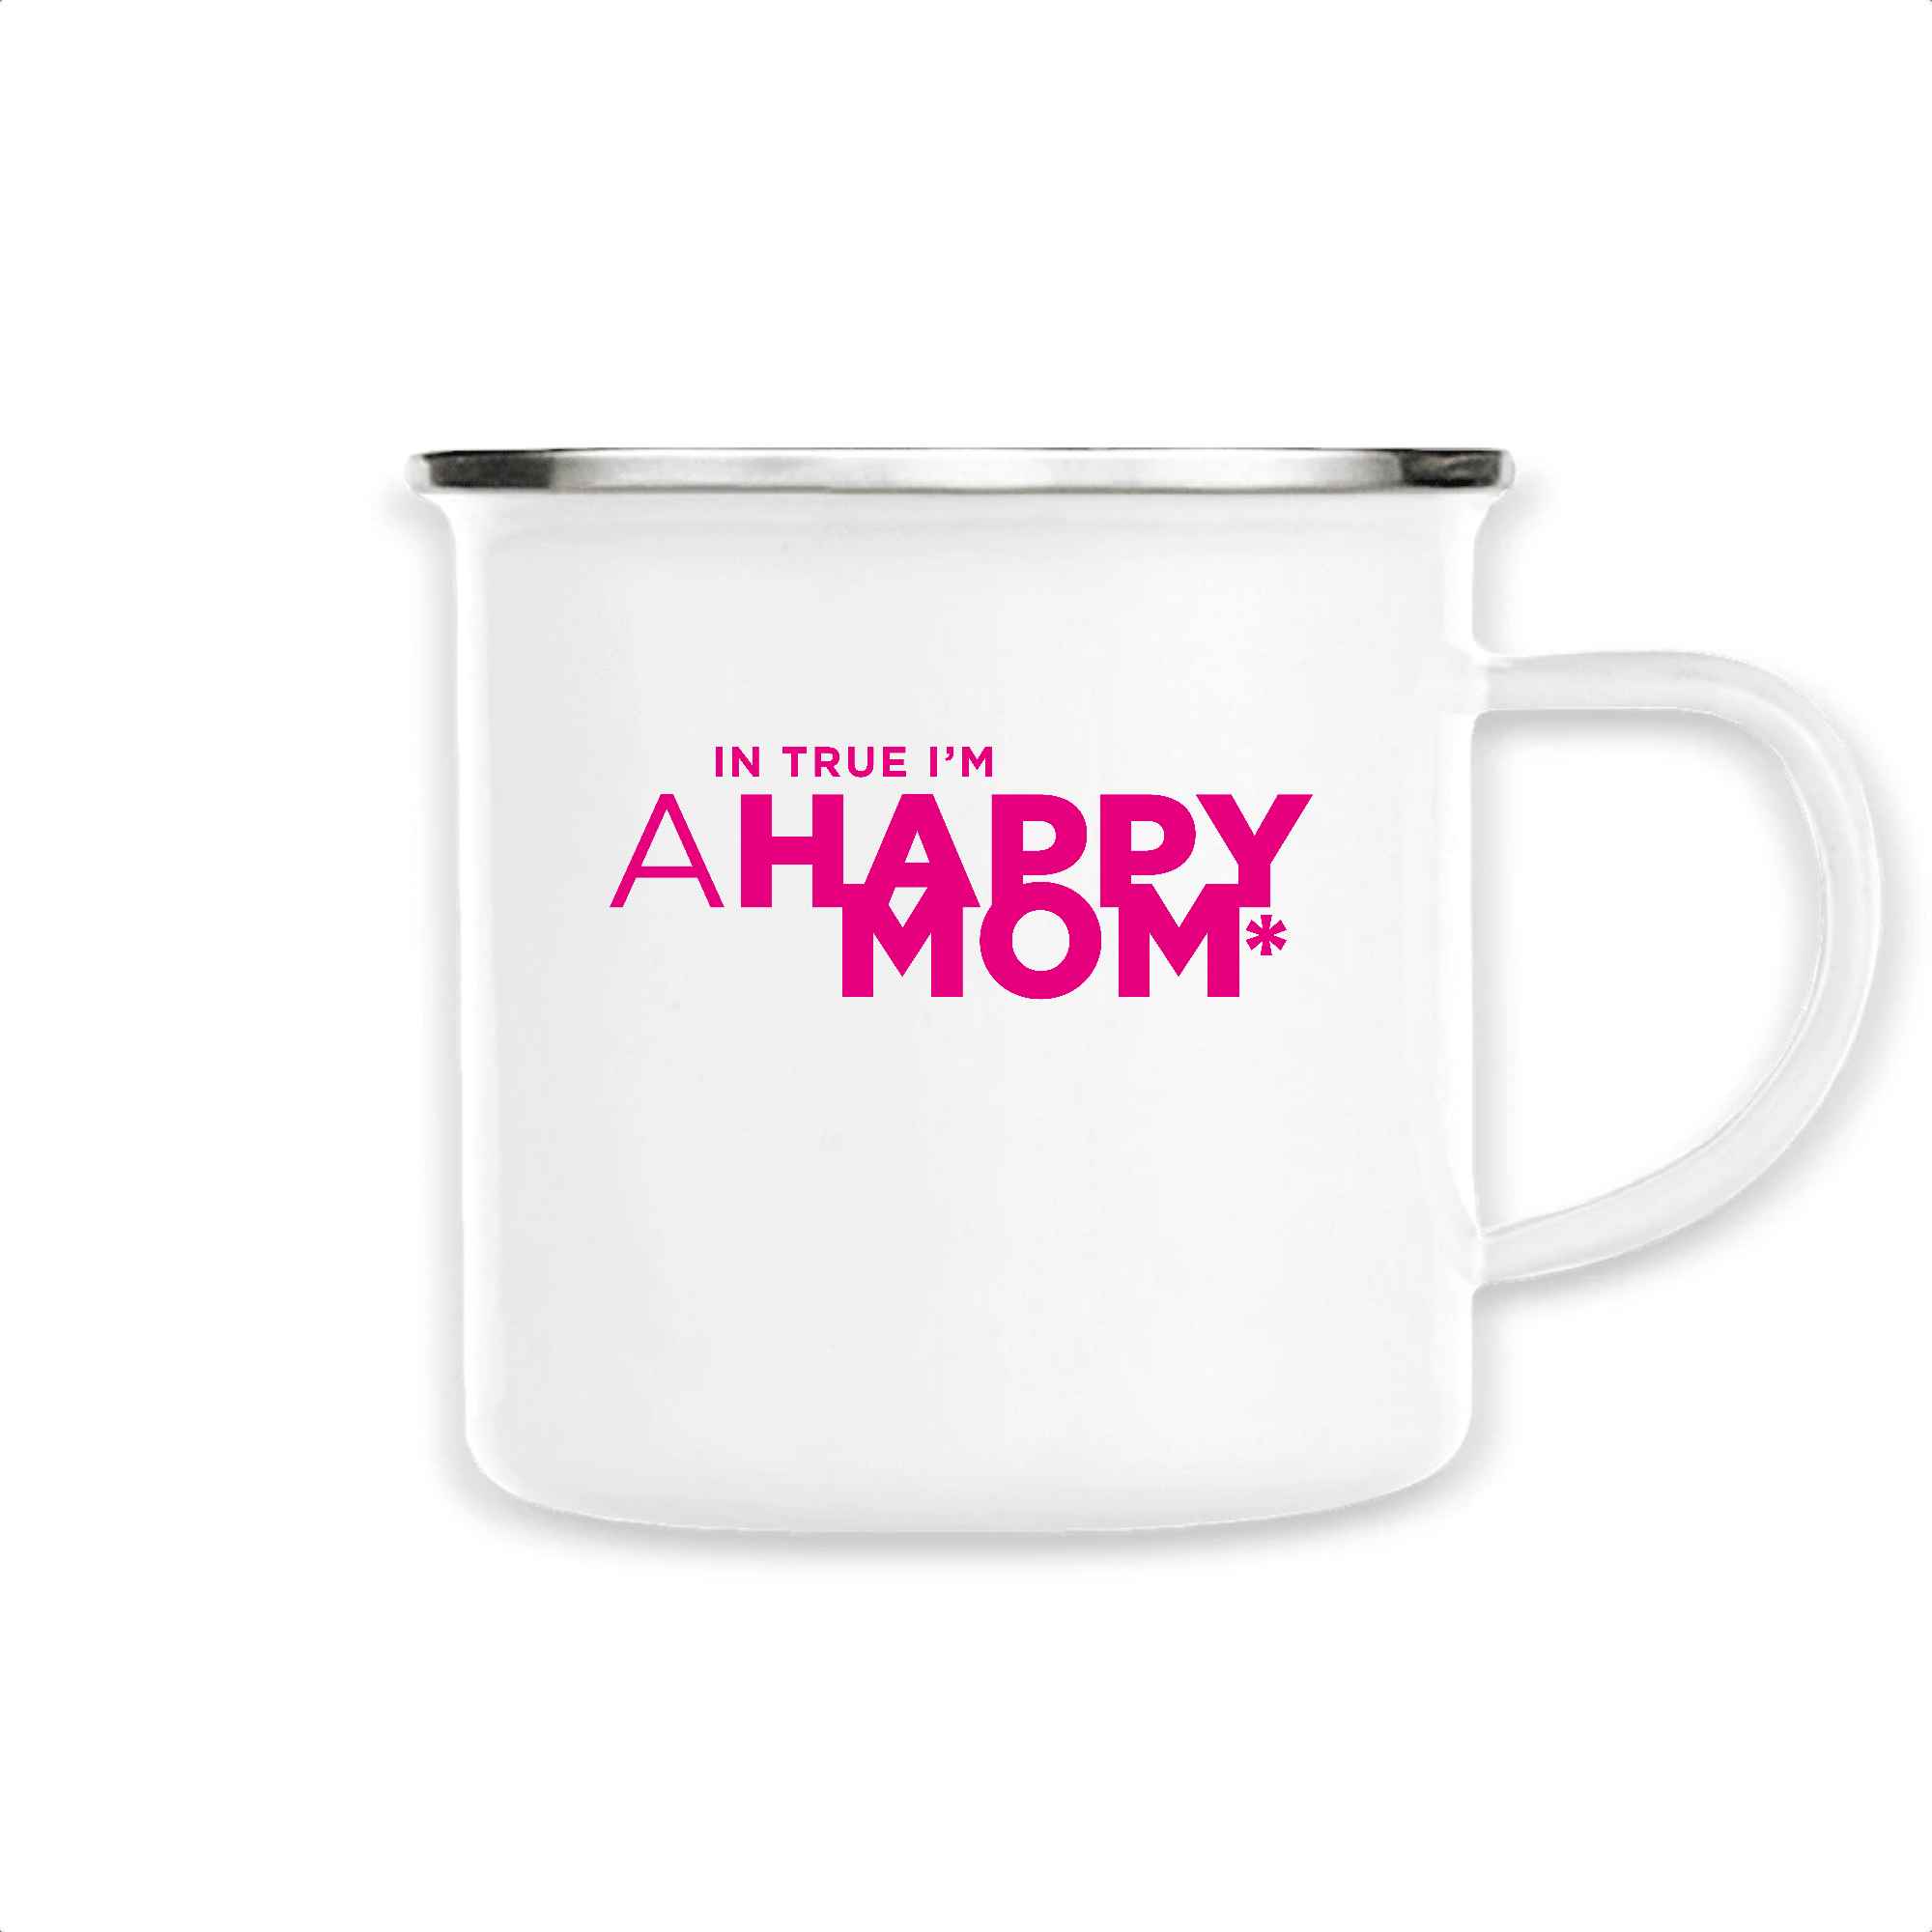 Mug émaillé blanc et rose HAPPY MOM - Maman heureuse